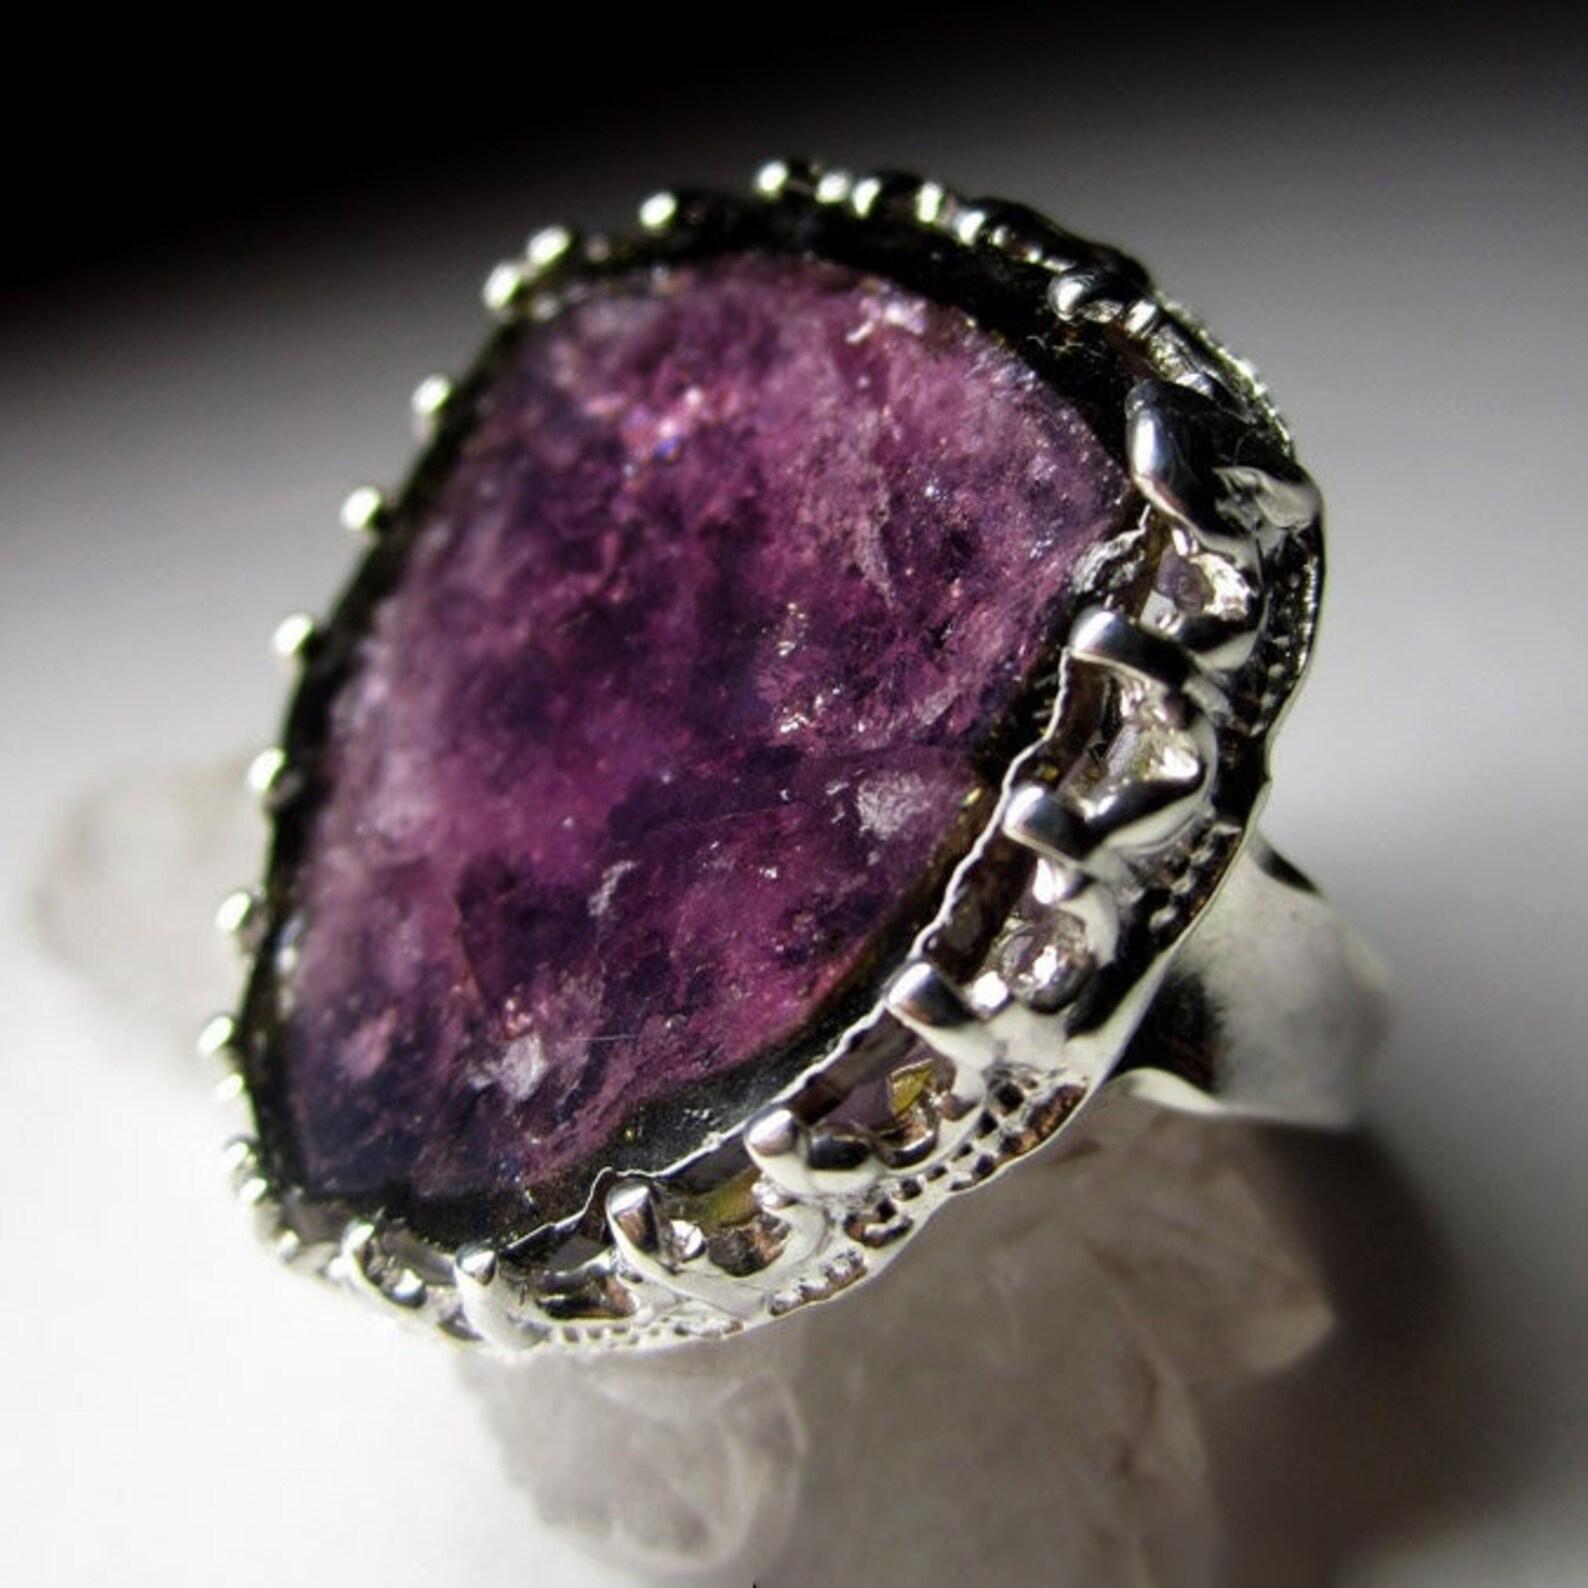 Large silver ring with slice of natural Purple Tourmaline
stone measurements - 0.2 х 0.98 х 1.14 in / 5 х 25 х 29 mm
stone weight - 13.5 carats
ring weight -12.65 grams
ring size - 8.5 US 